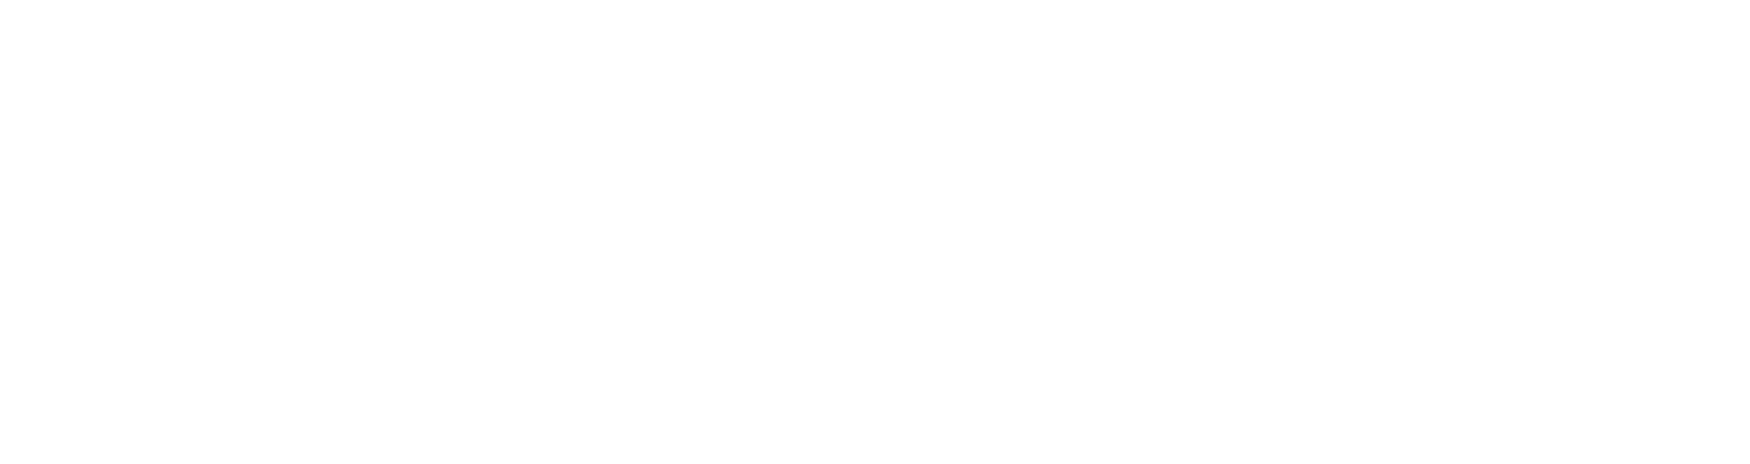 About National Geographic Kids  Christchurch City Libraries Ngā Kete  Wānanga o Ōtautahi